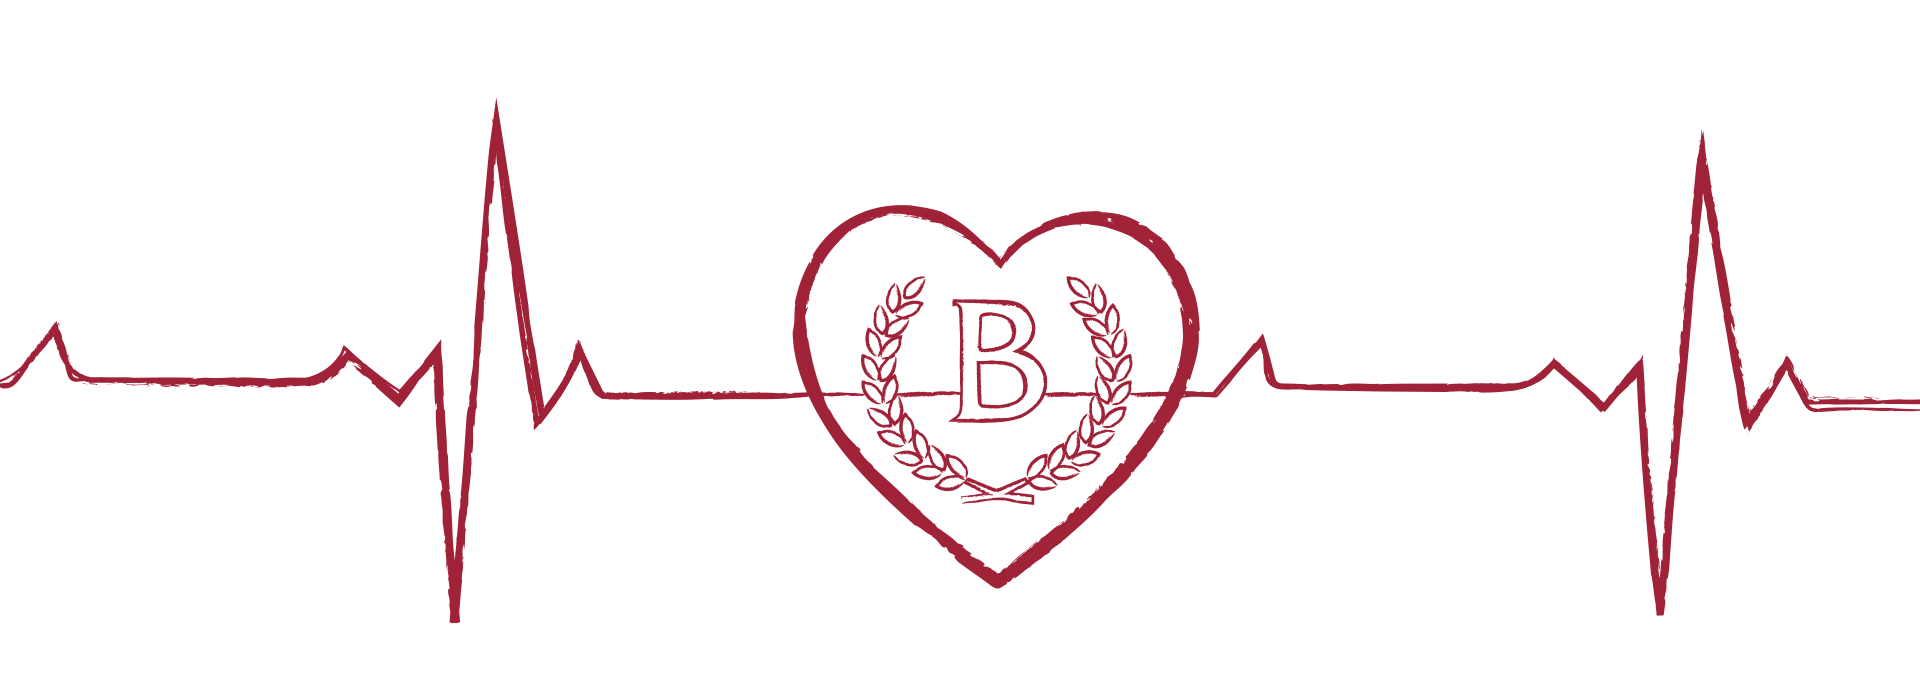 ekg line with heart and B logo